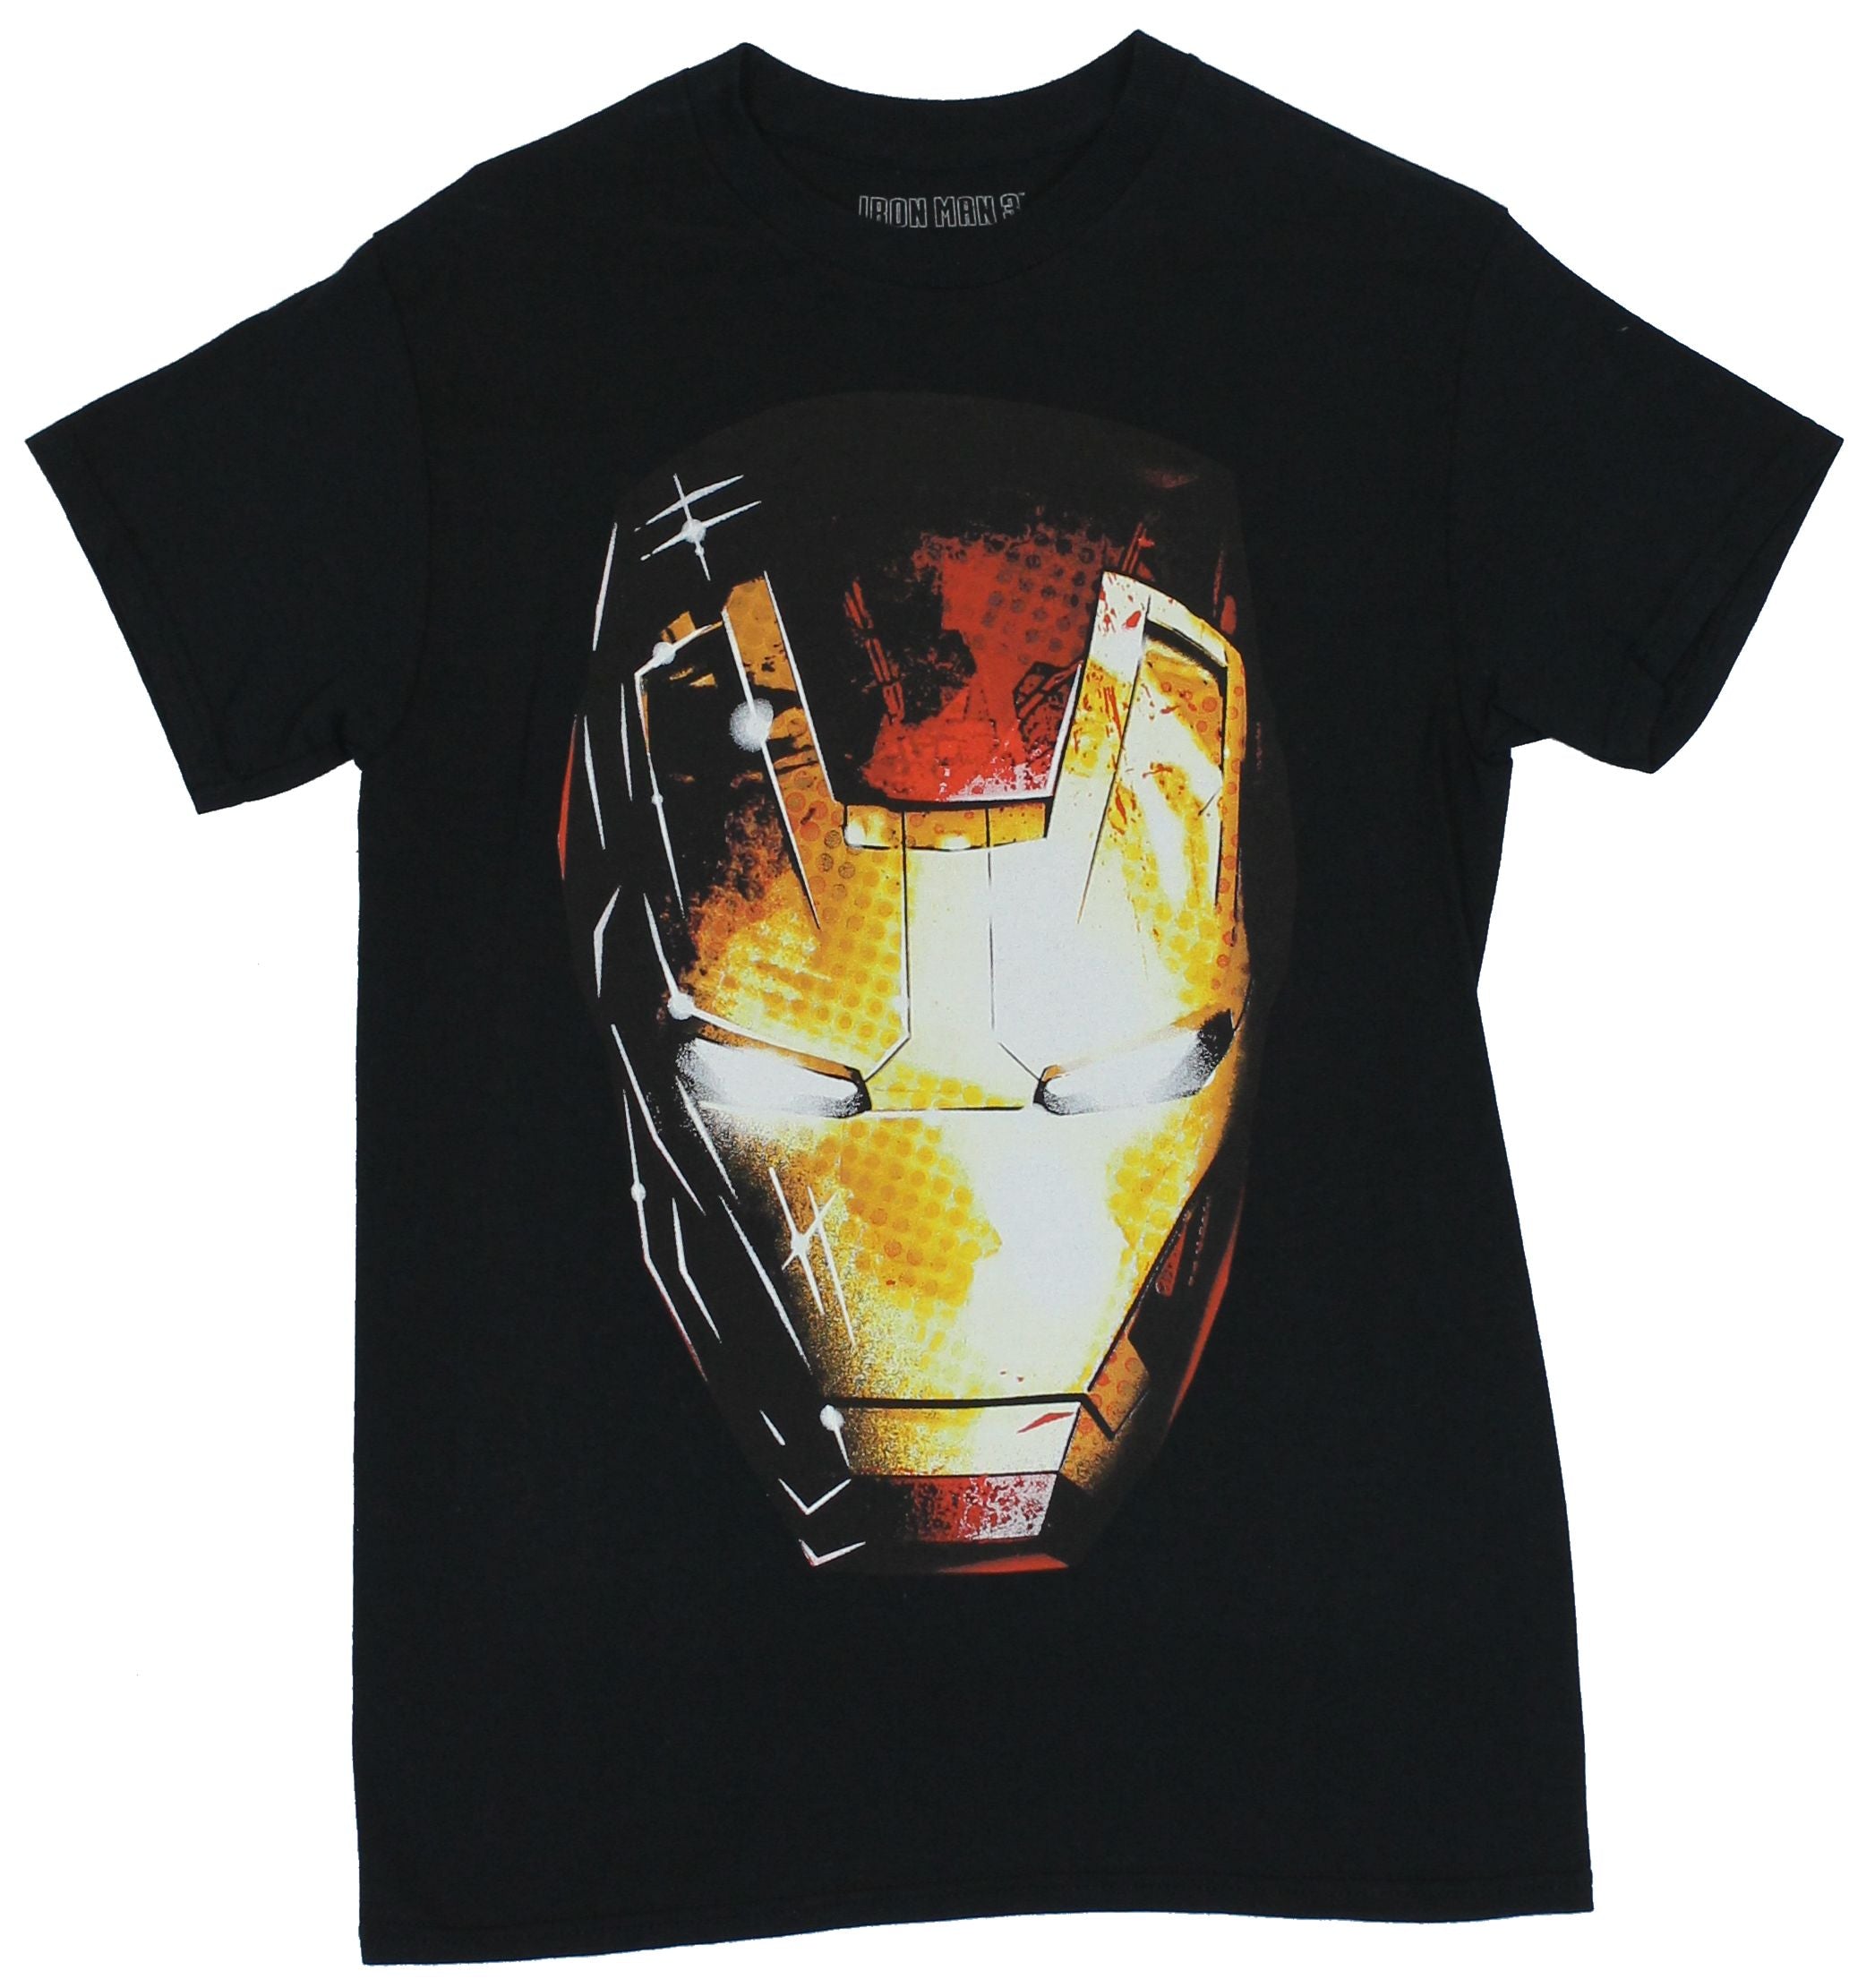 Iron Man (Marvel Comics) Mens T-Shirt - Face Helmet Image in Light & Shadow